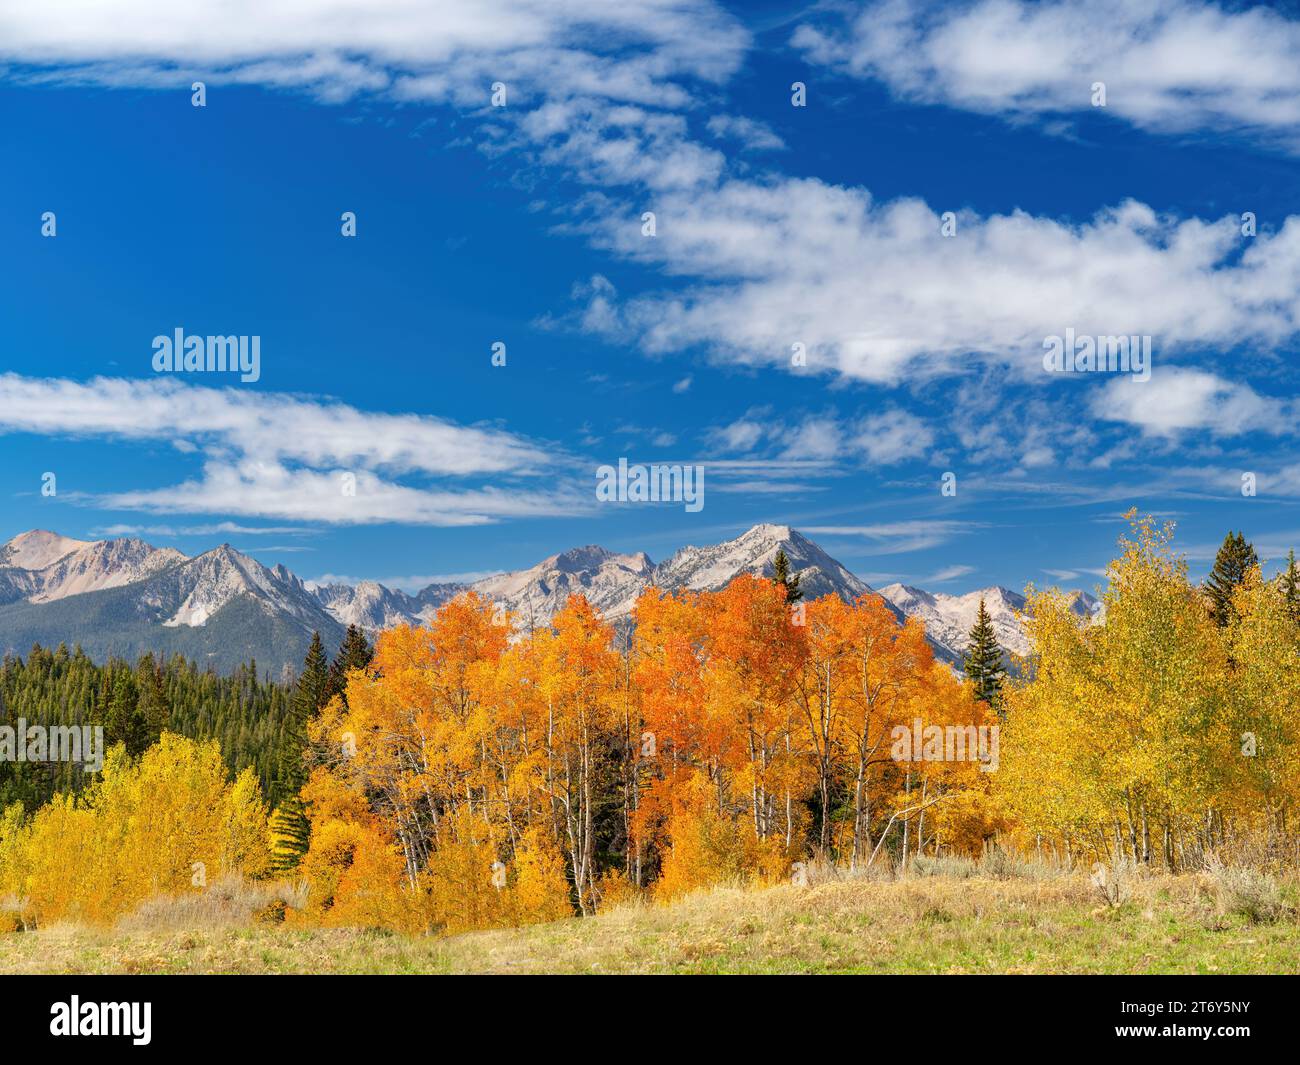 Sawtooth mountain range with fall colored Aspen trees Stock Photo